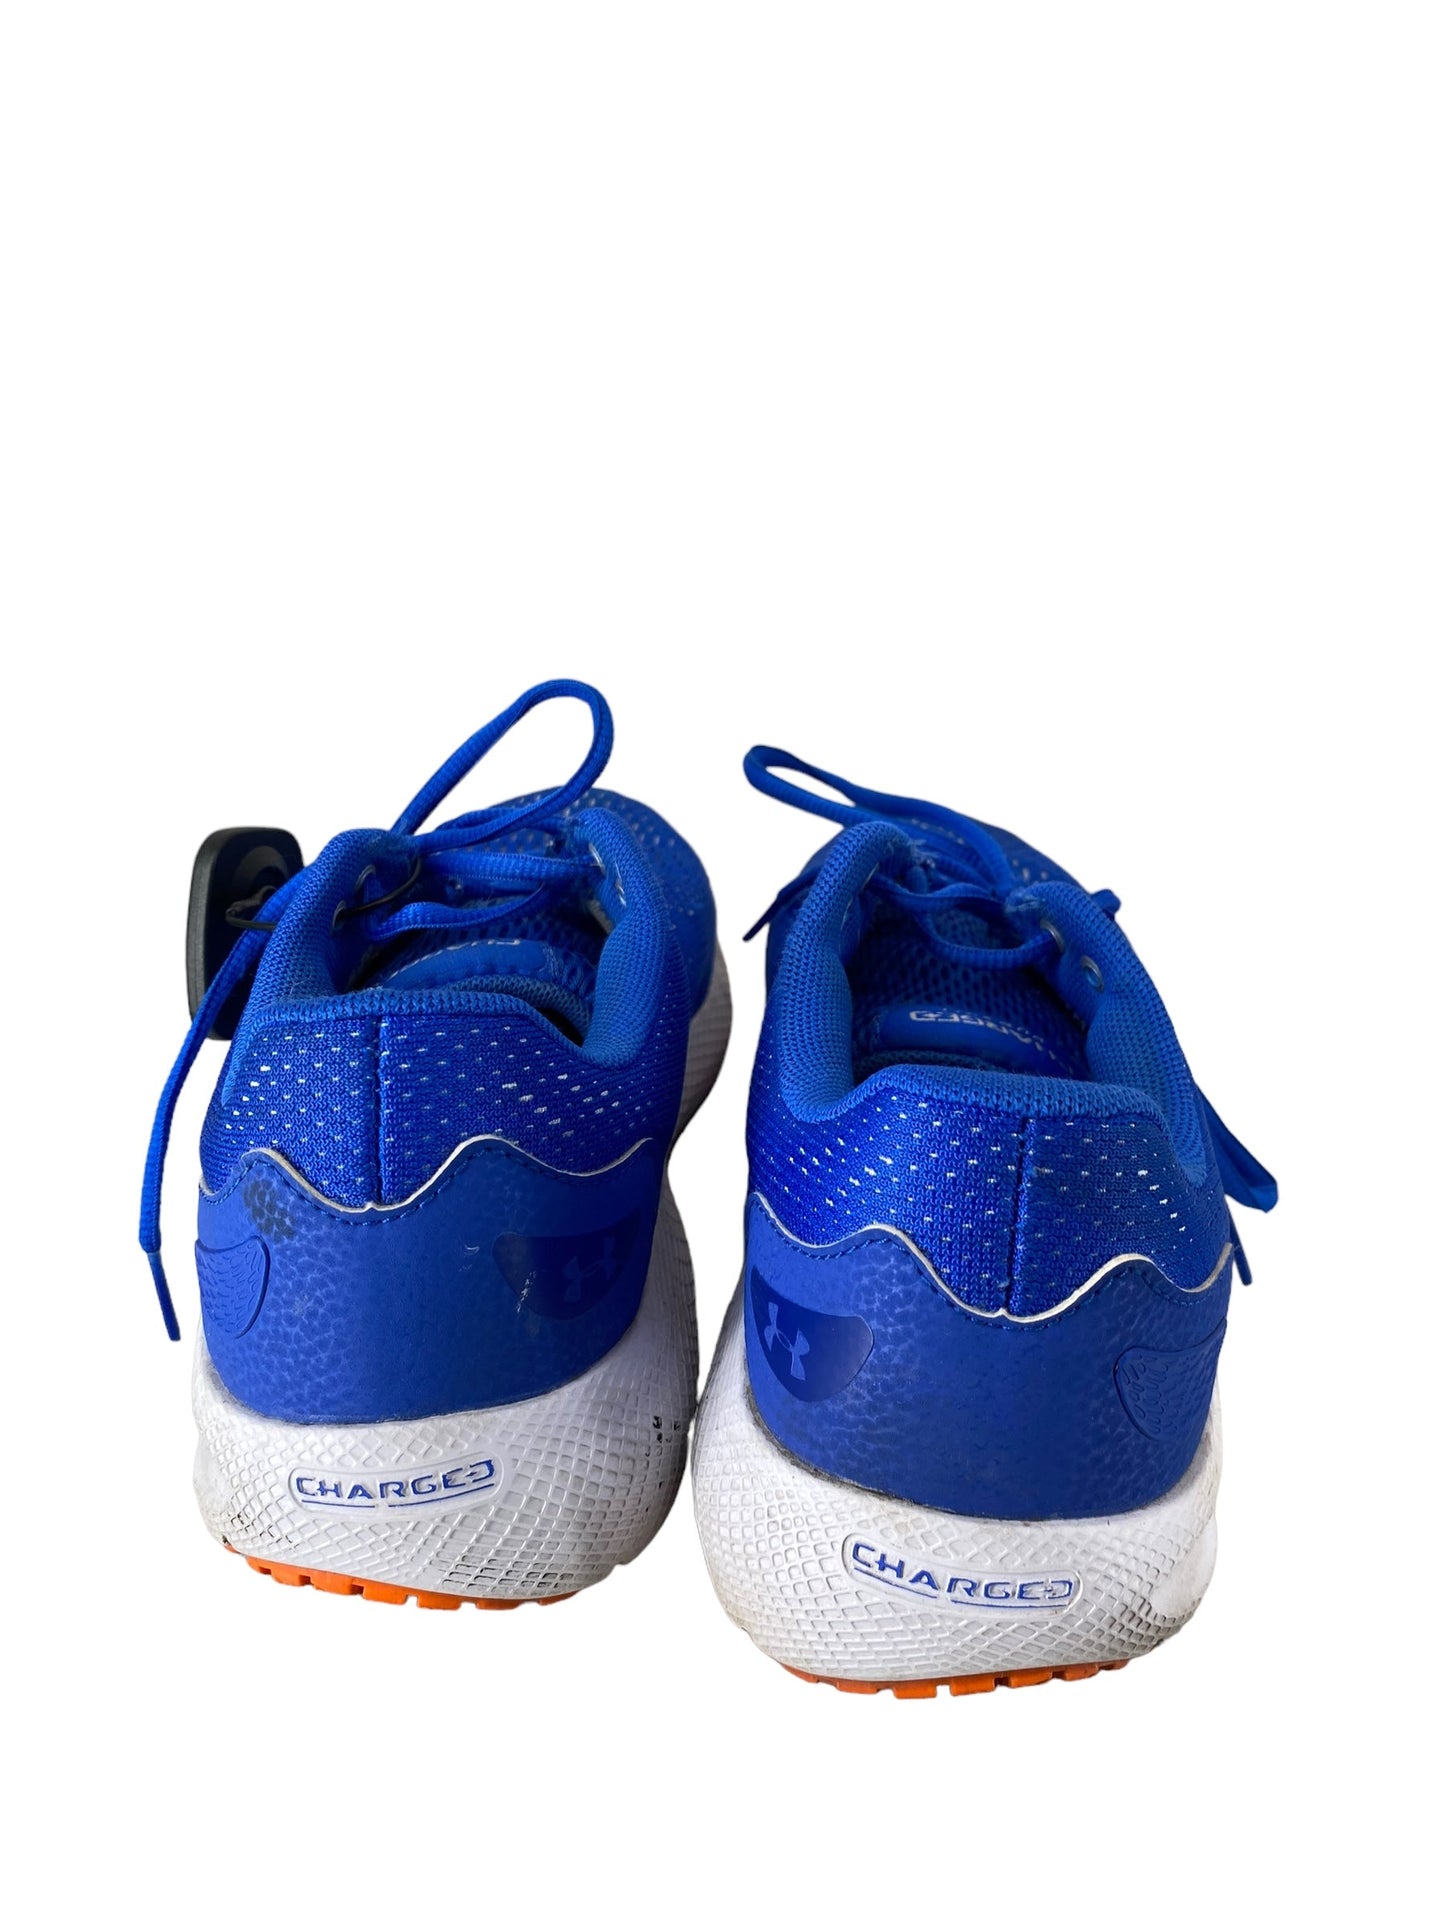 Blue Shoes Athletic Under Armour, Size 8